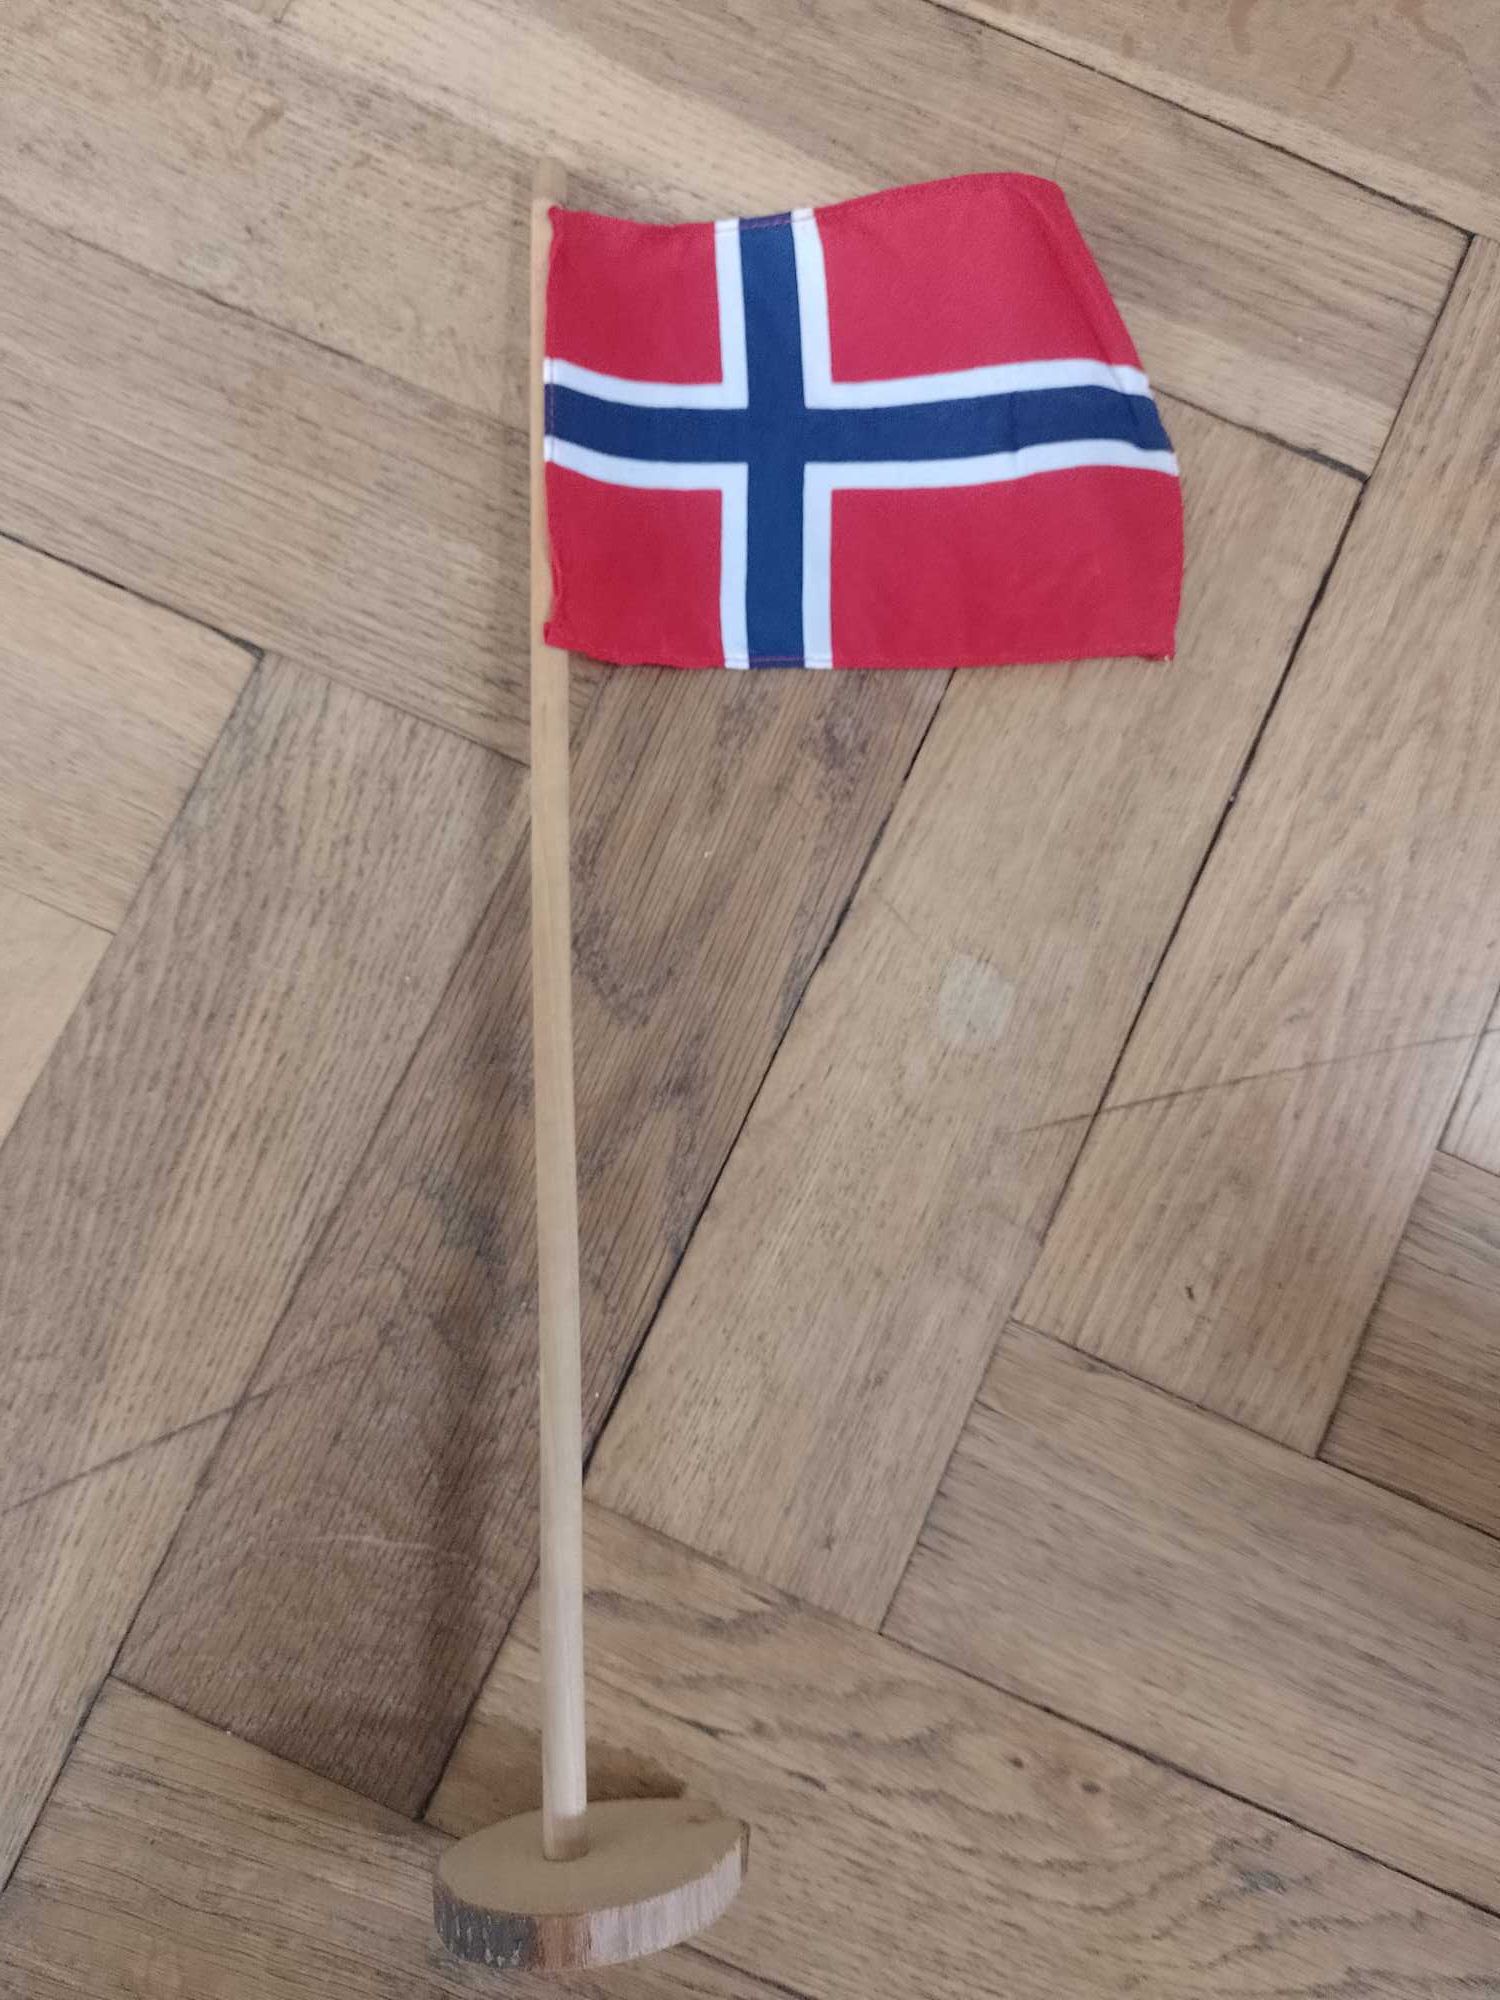 Flaga Norwegii na stojaczku